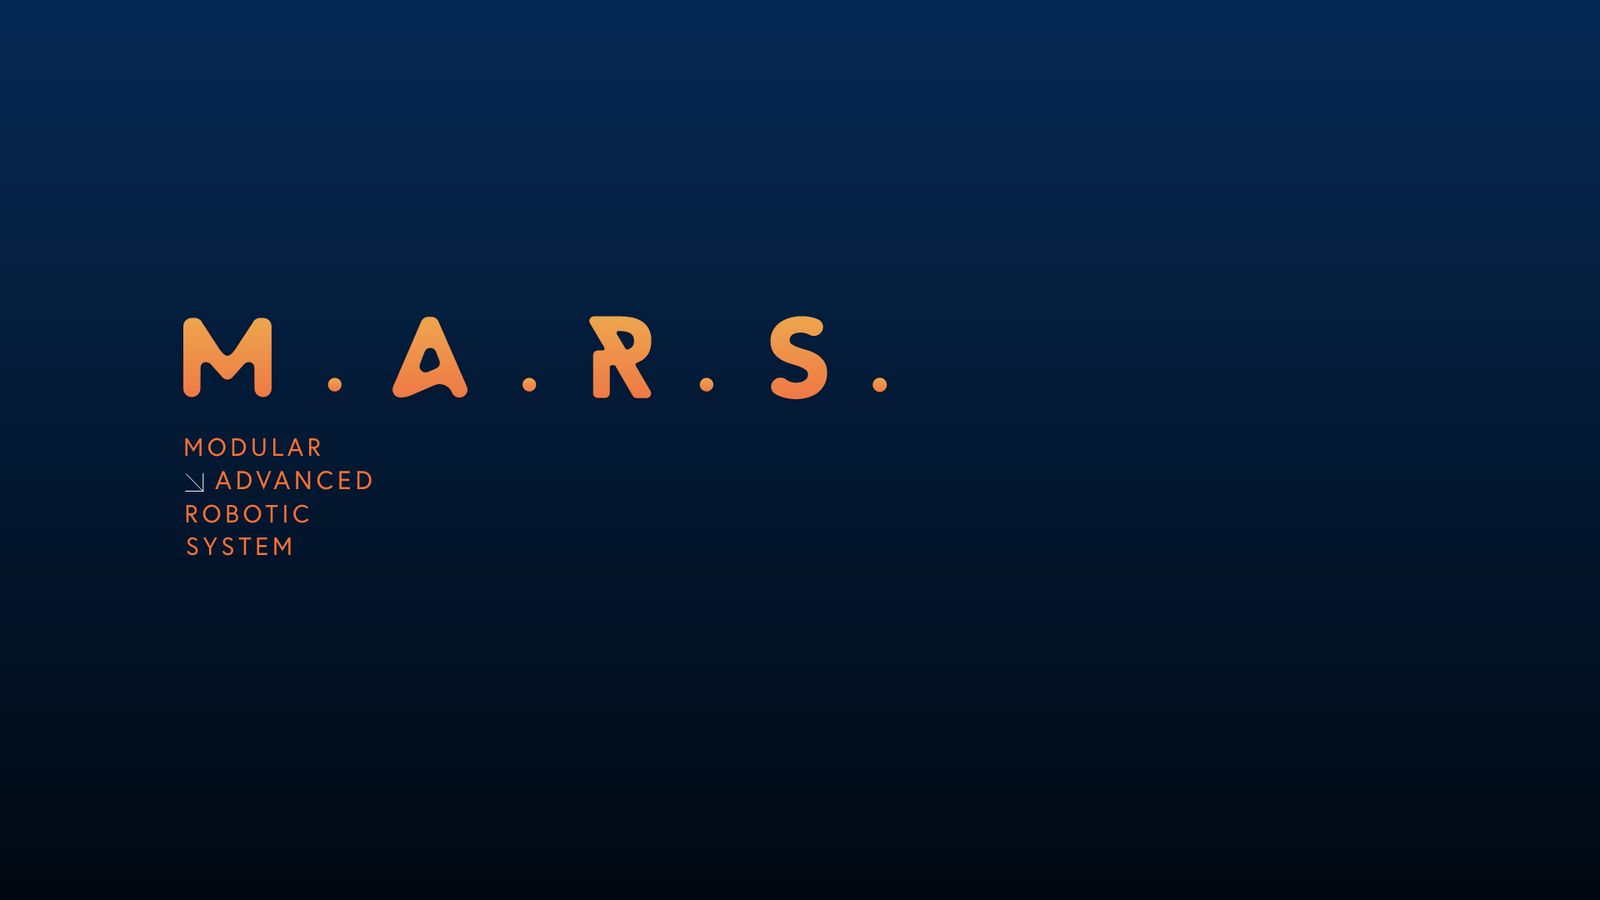 NASA M.A.R.S.